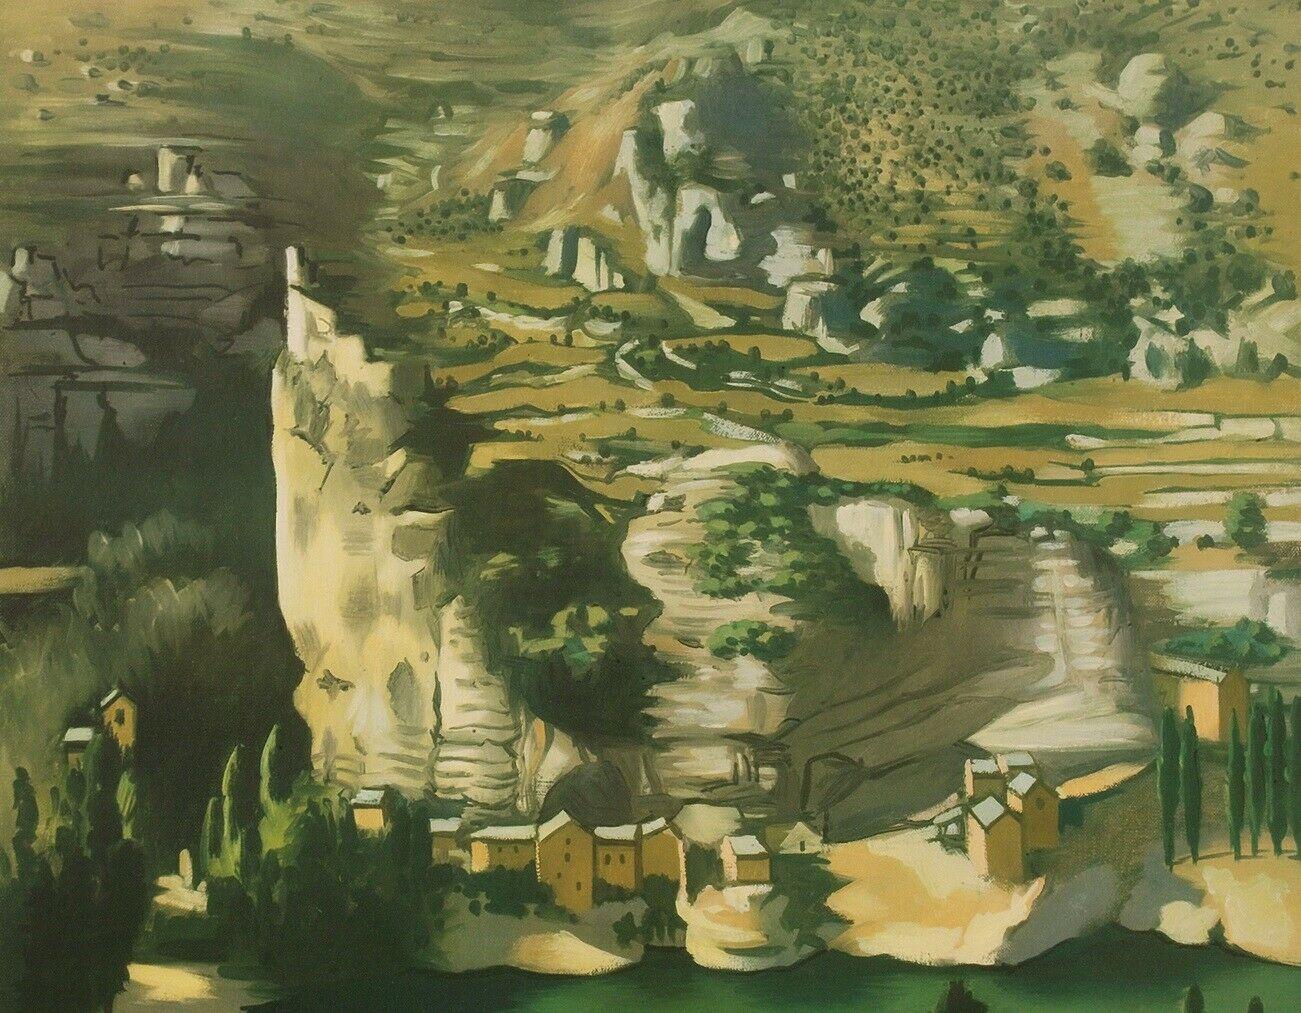 Original Travel Poster-Rohner-Provence Landscape Tarn Gorges, 1951 In Good Condition For Sale In SAINT-OUEN-SUR-SEINE, FR